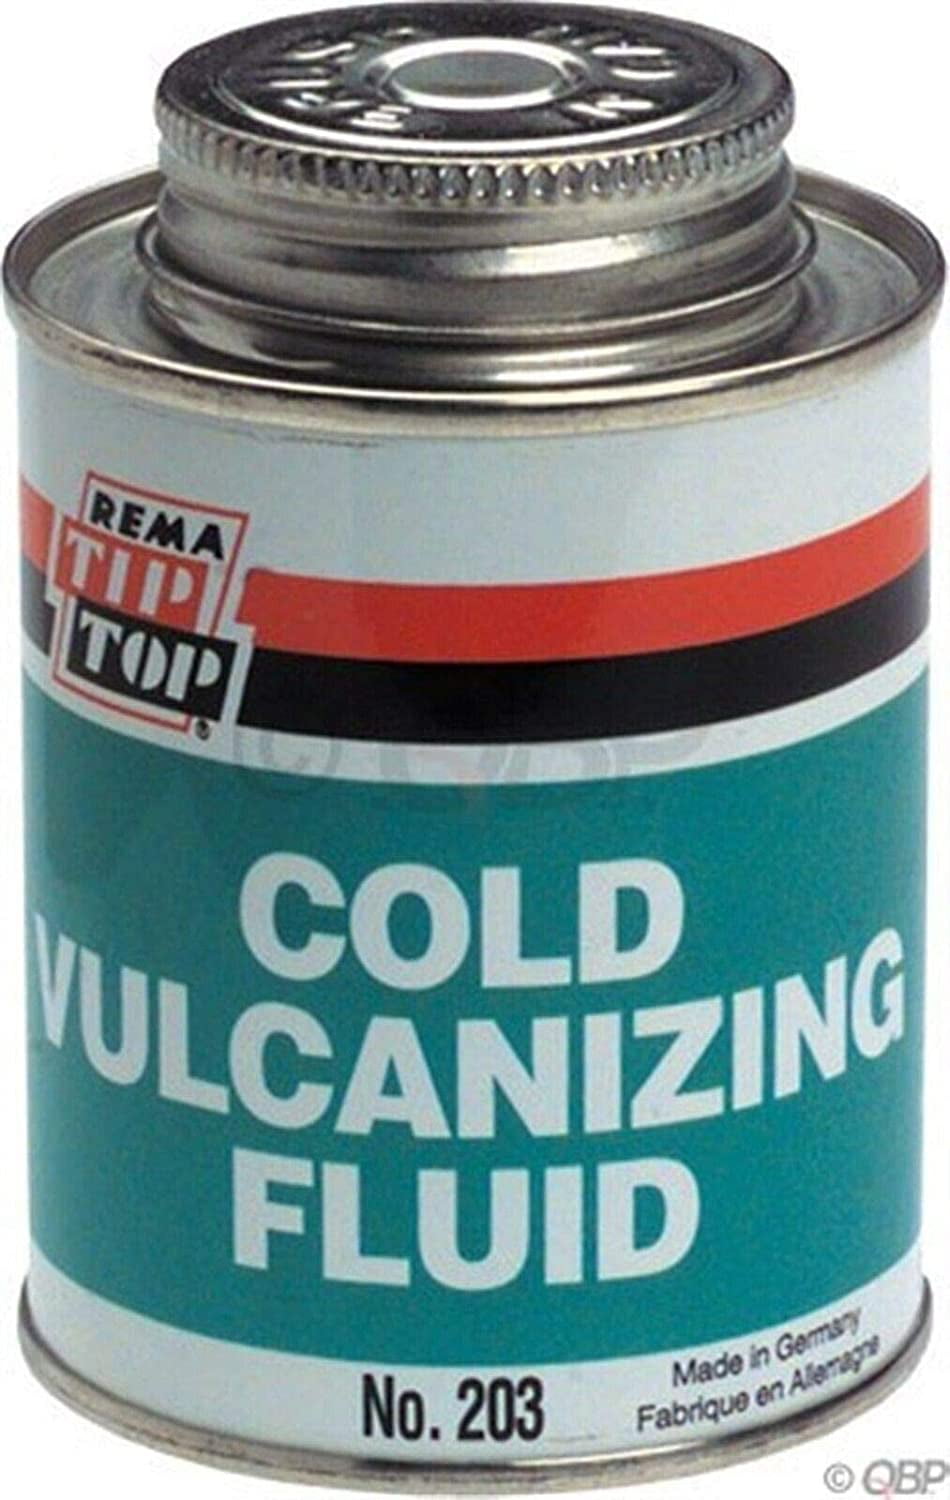 Bewusteloos niemand De schuld geven Rema Tip Top Vulcanizing fluid, 8oz brush can ORM-D - Walmart.com